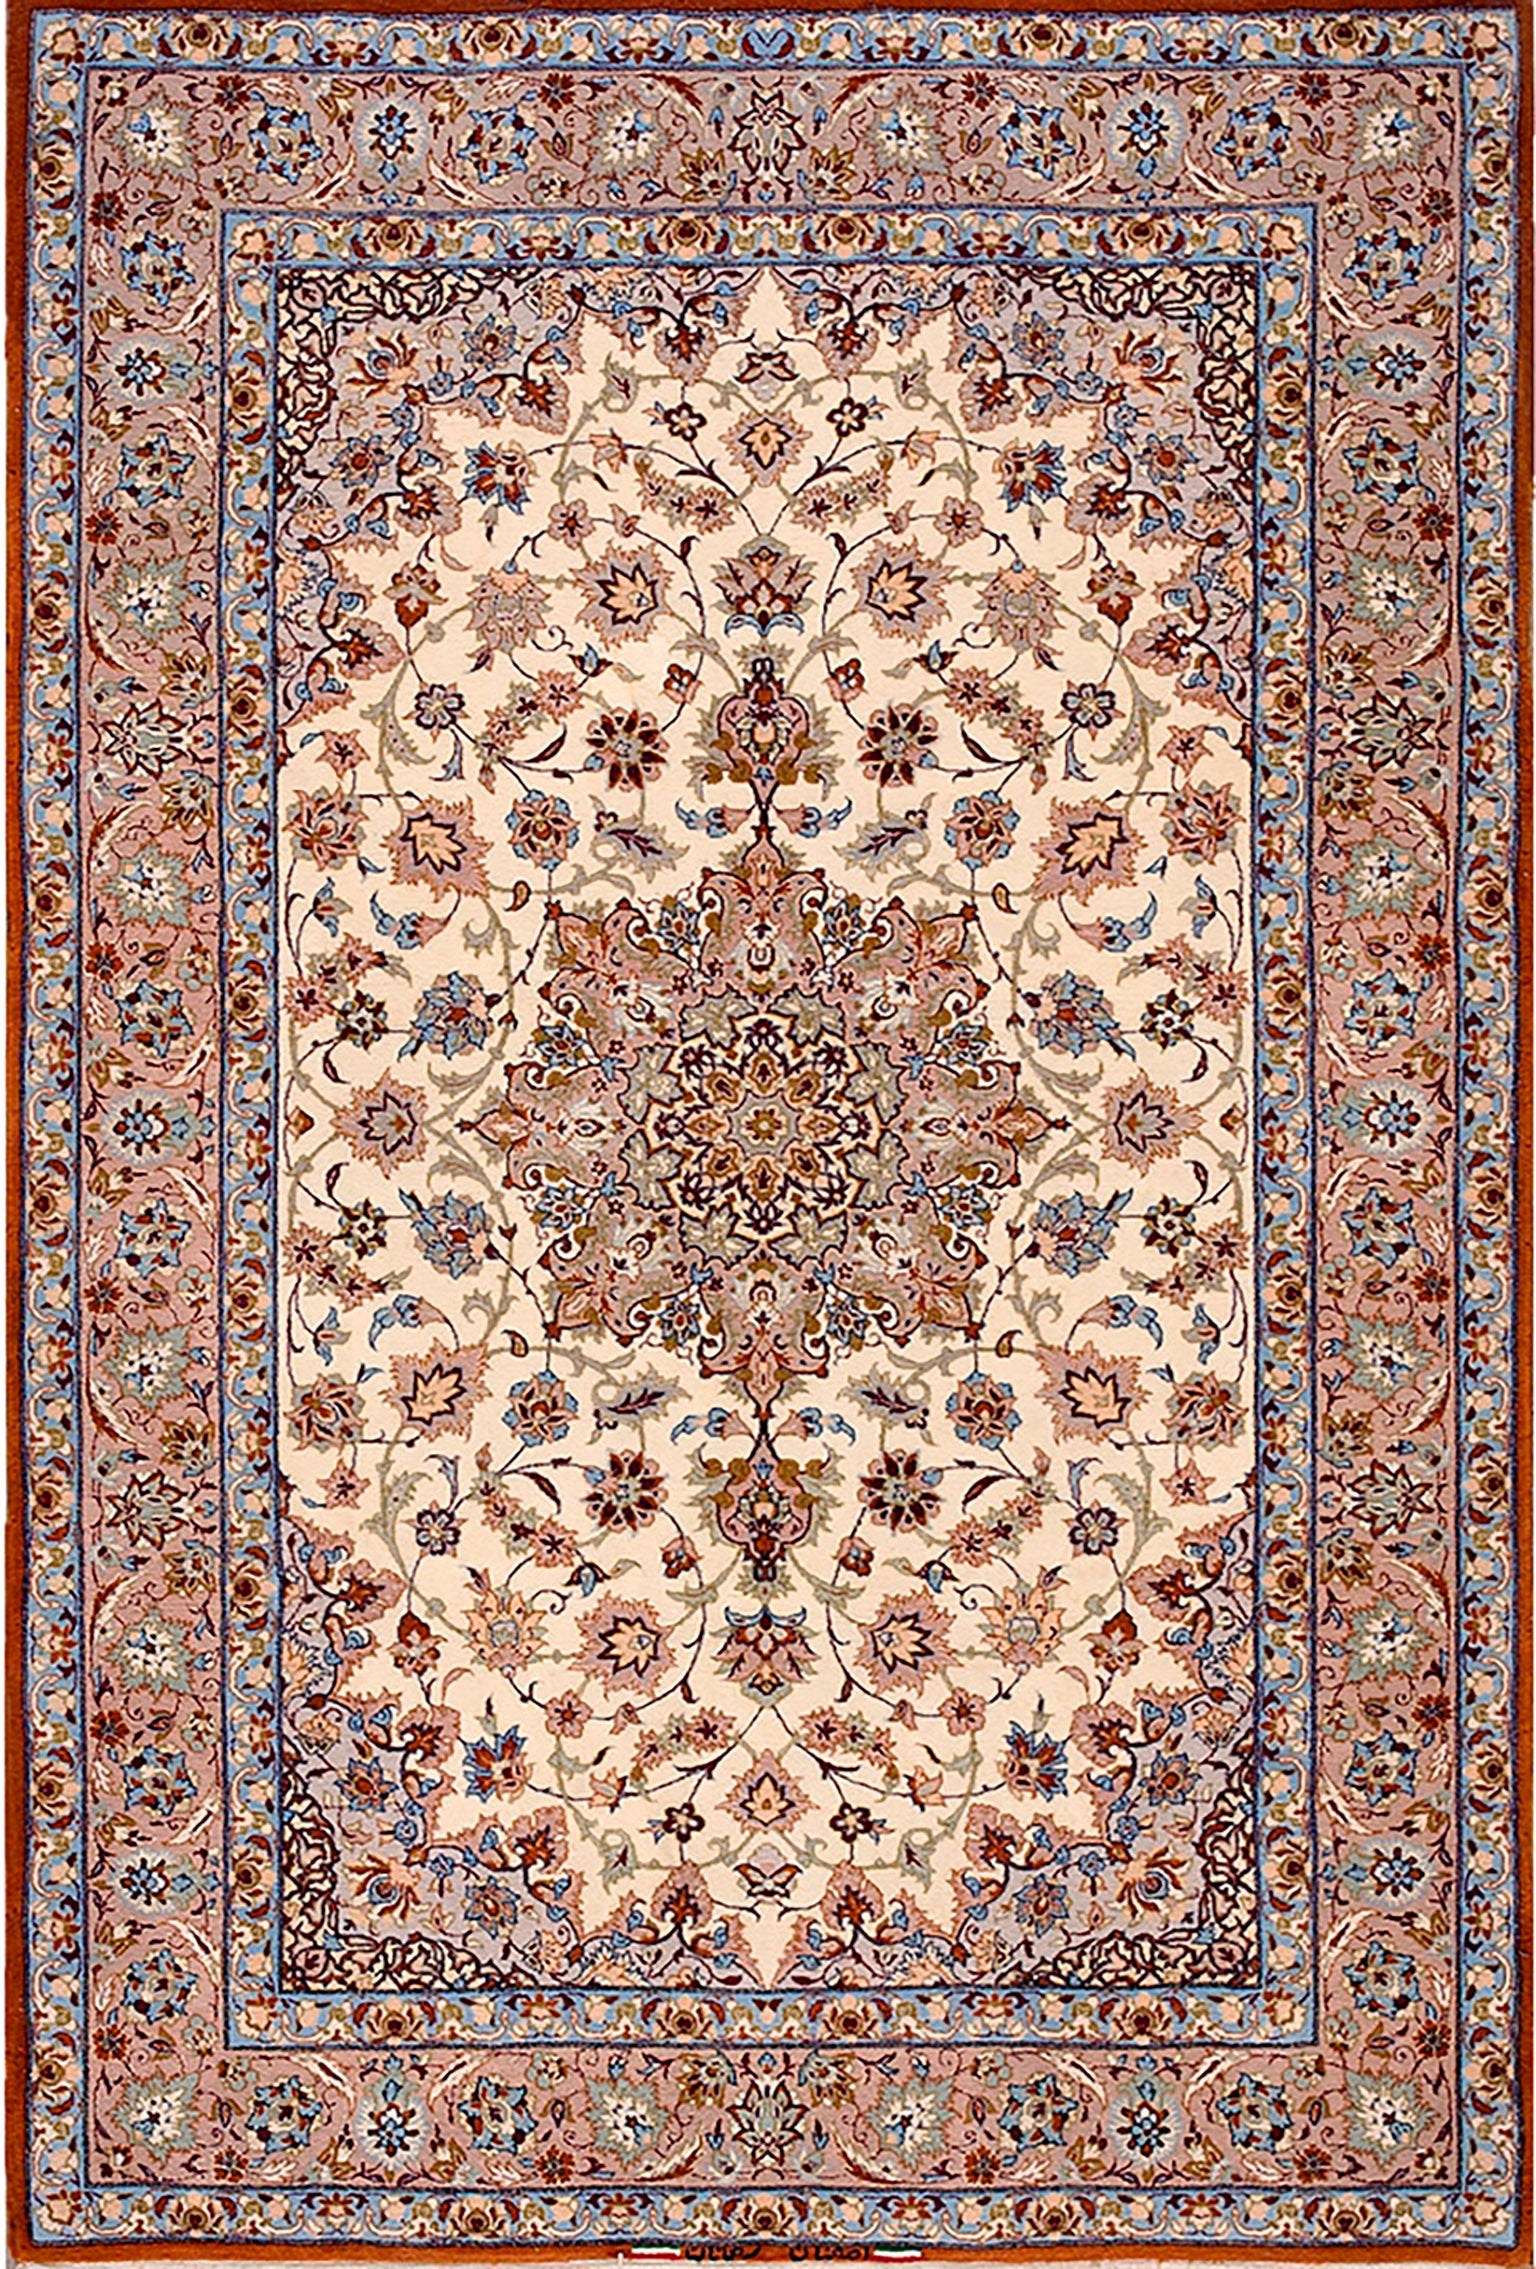 Mid 20th Century Isfahan Carpet with Silk Highlights ( 3'8" x 5'5" - 112 x 165 )